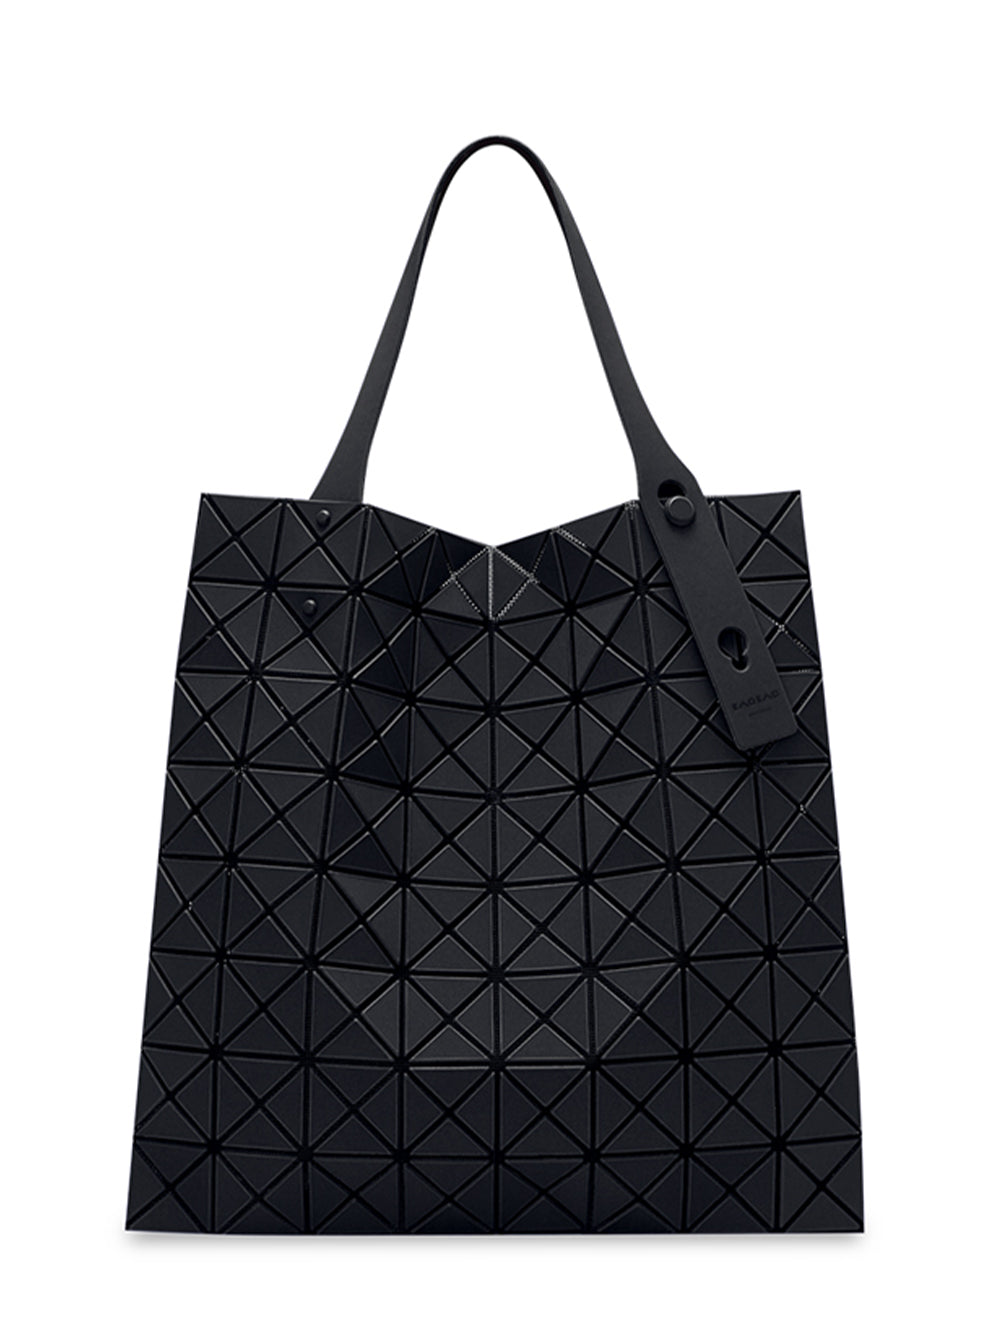 PRISM PLUS Handbag (Large) (Black)